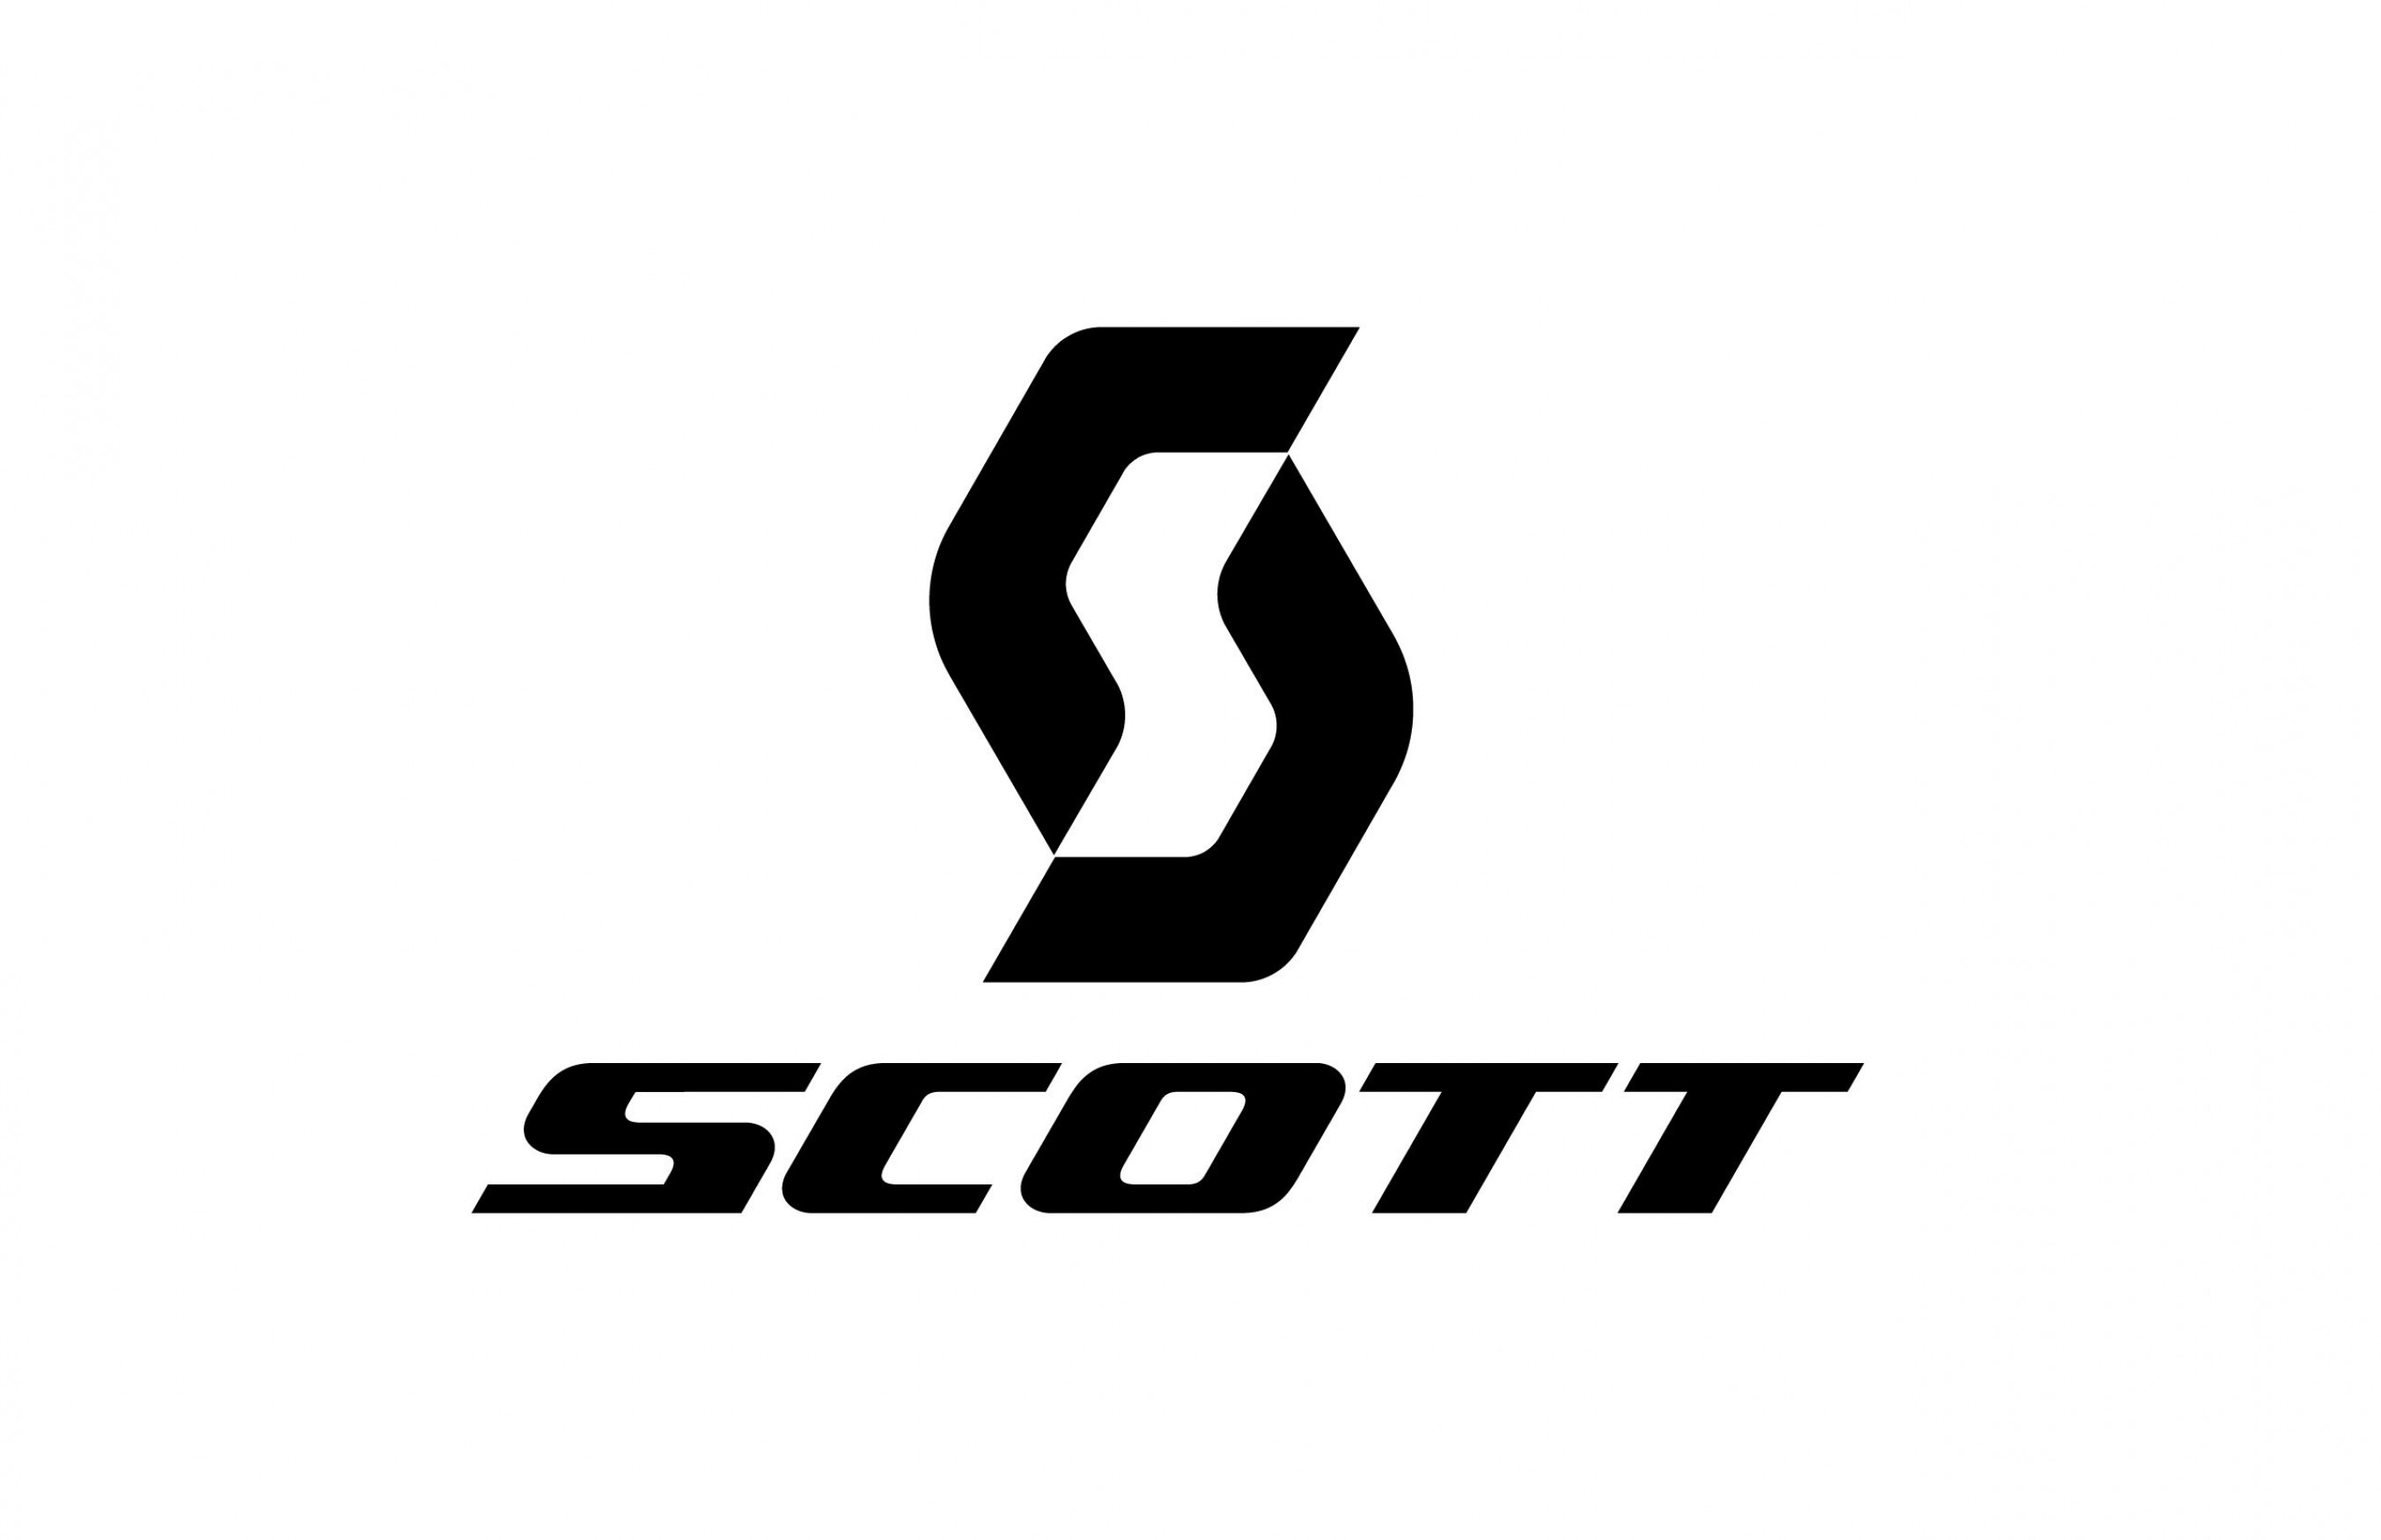 scott scale 900 elite 2019